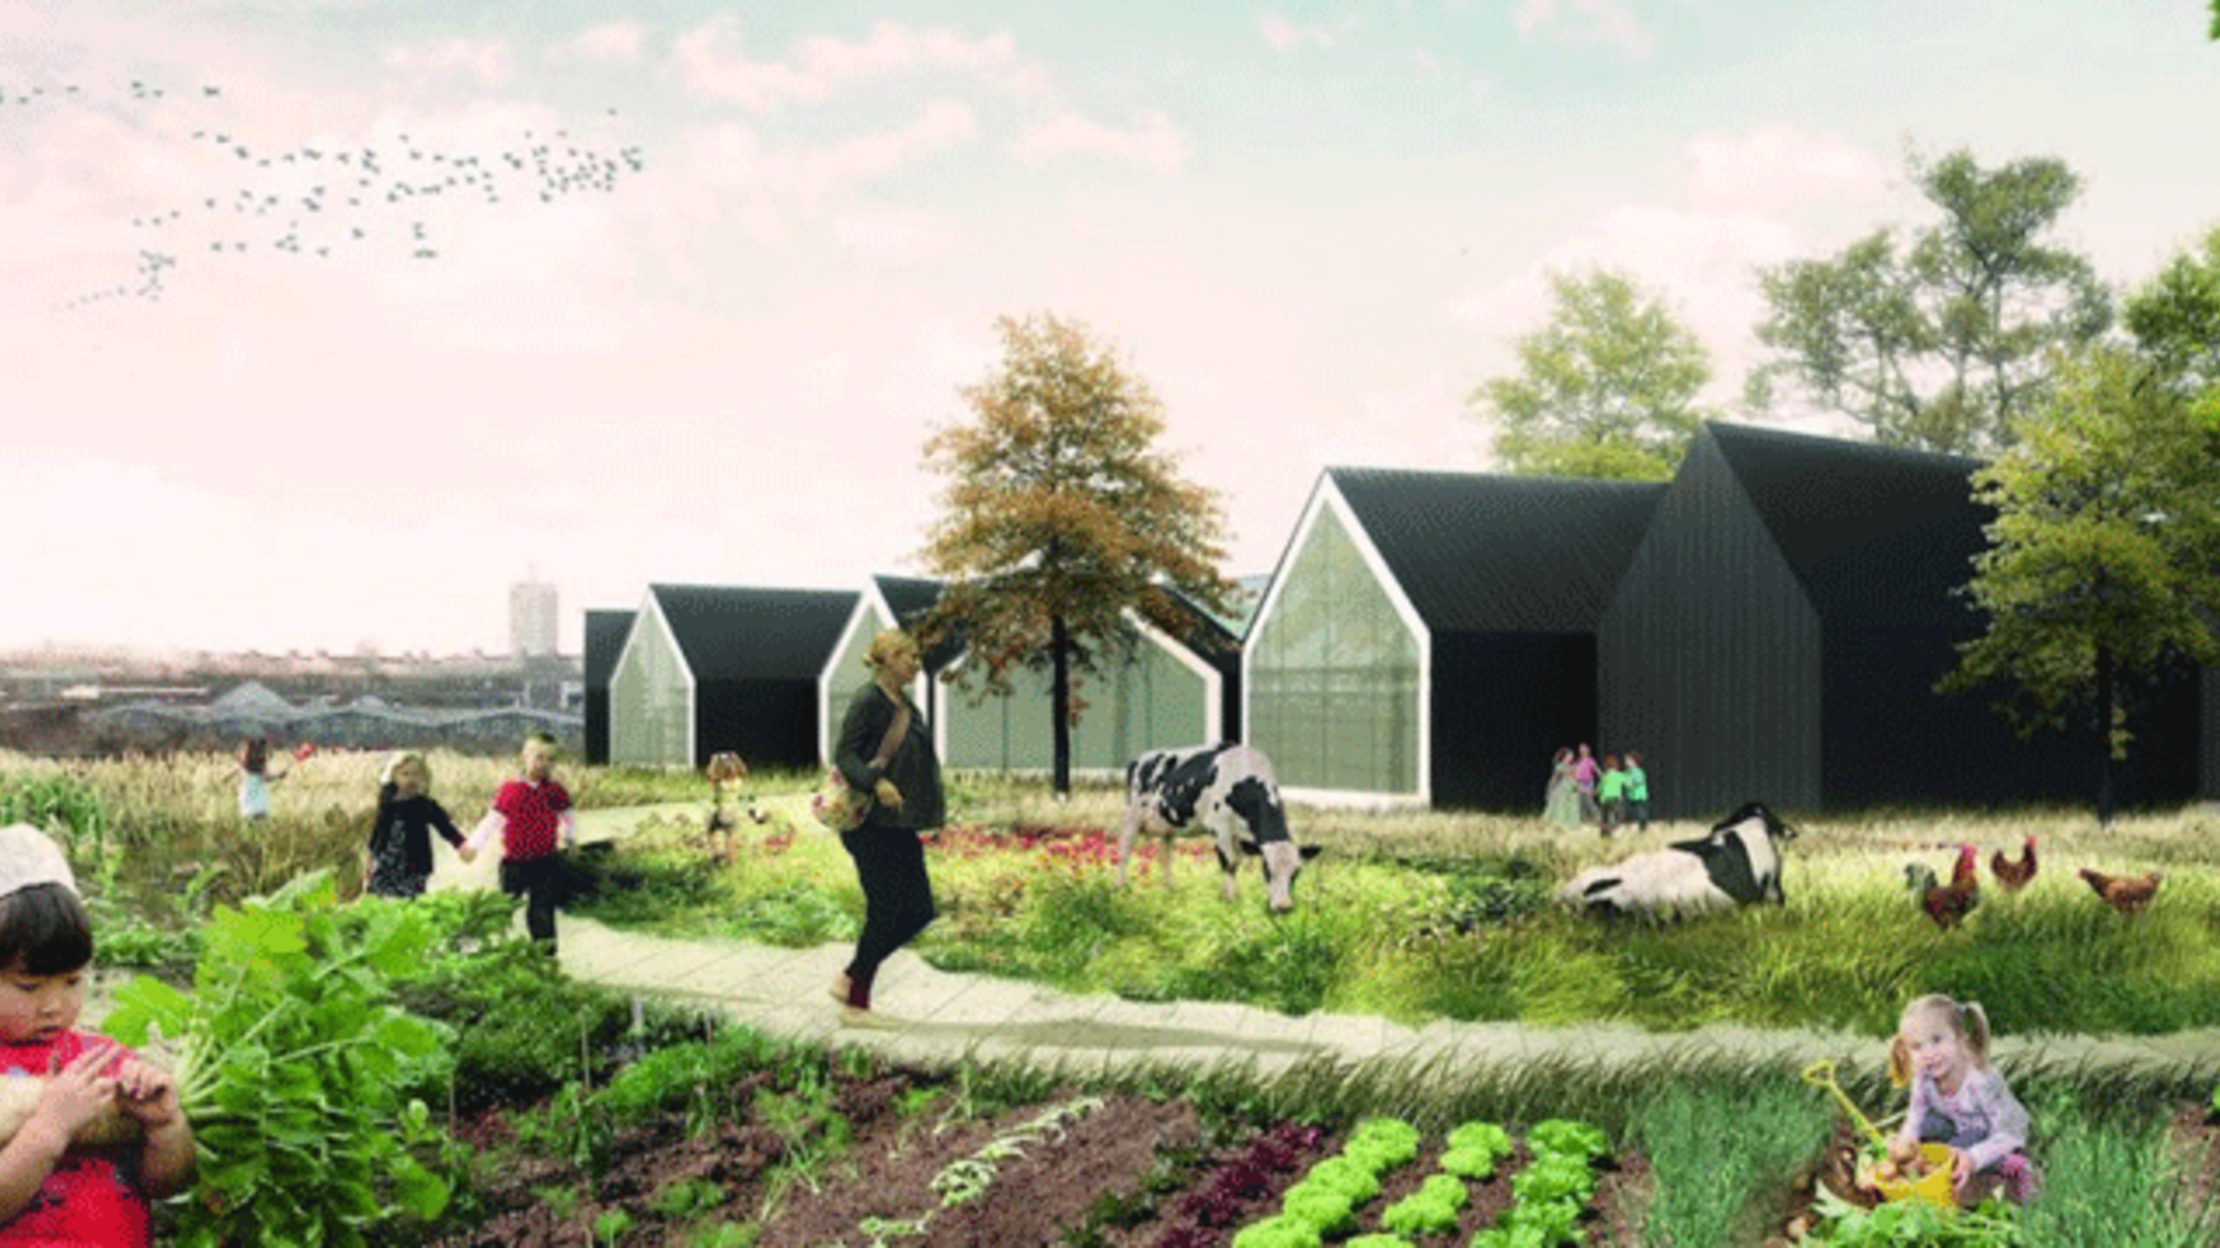 This Preschool Is Designed to Teach Kids to Farm Their Own